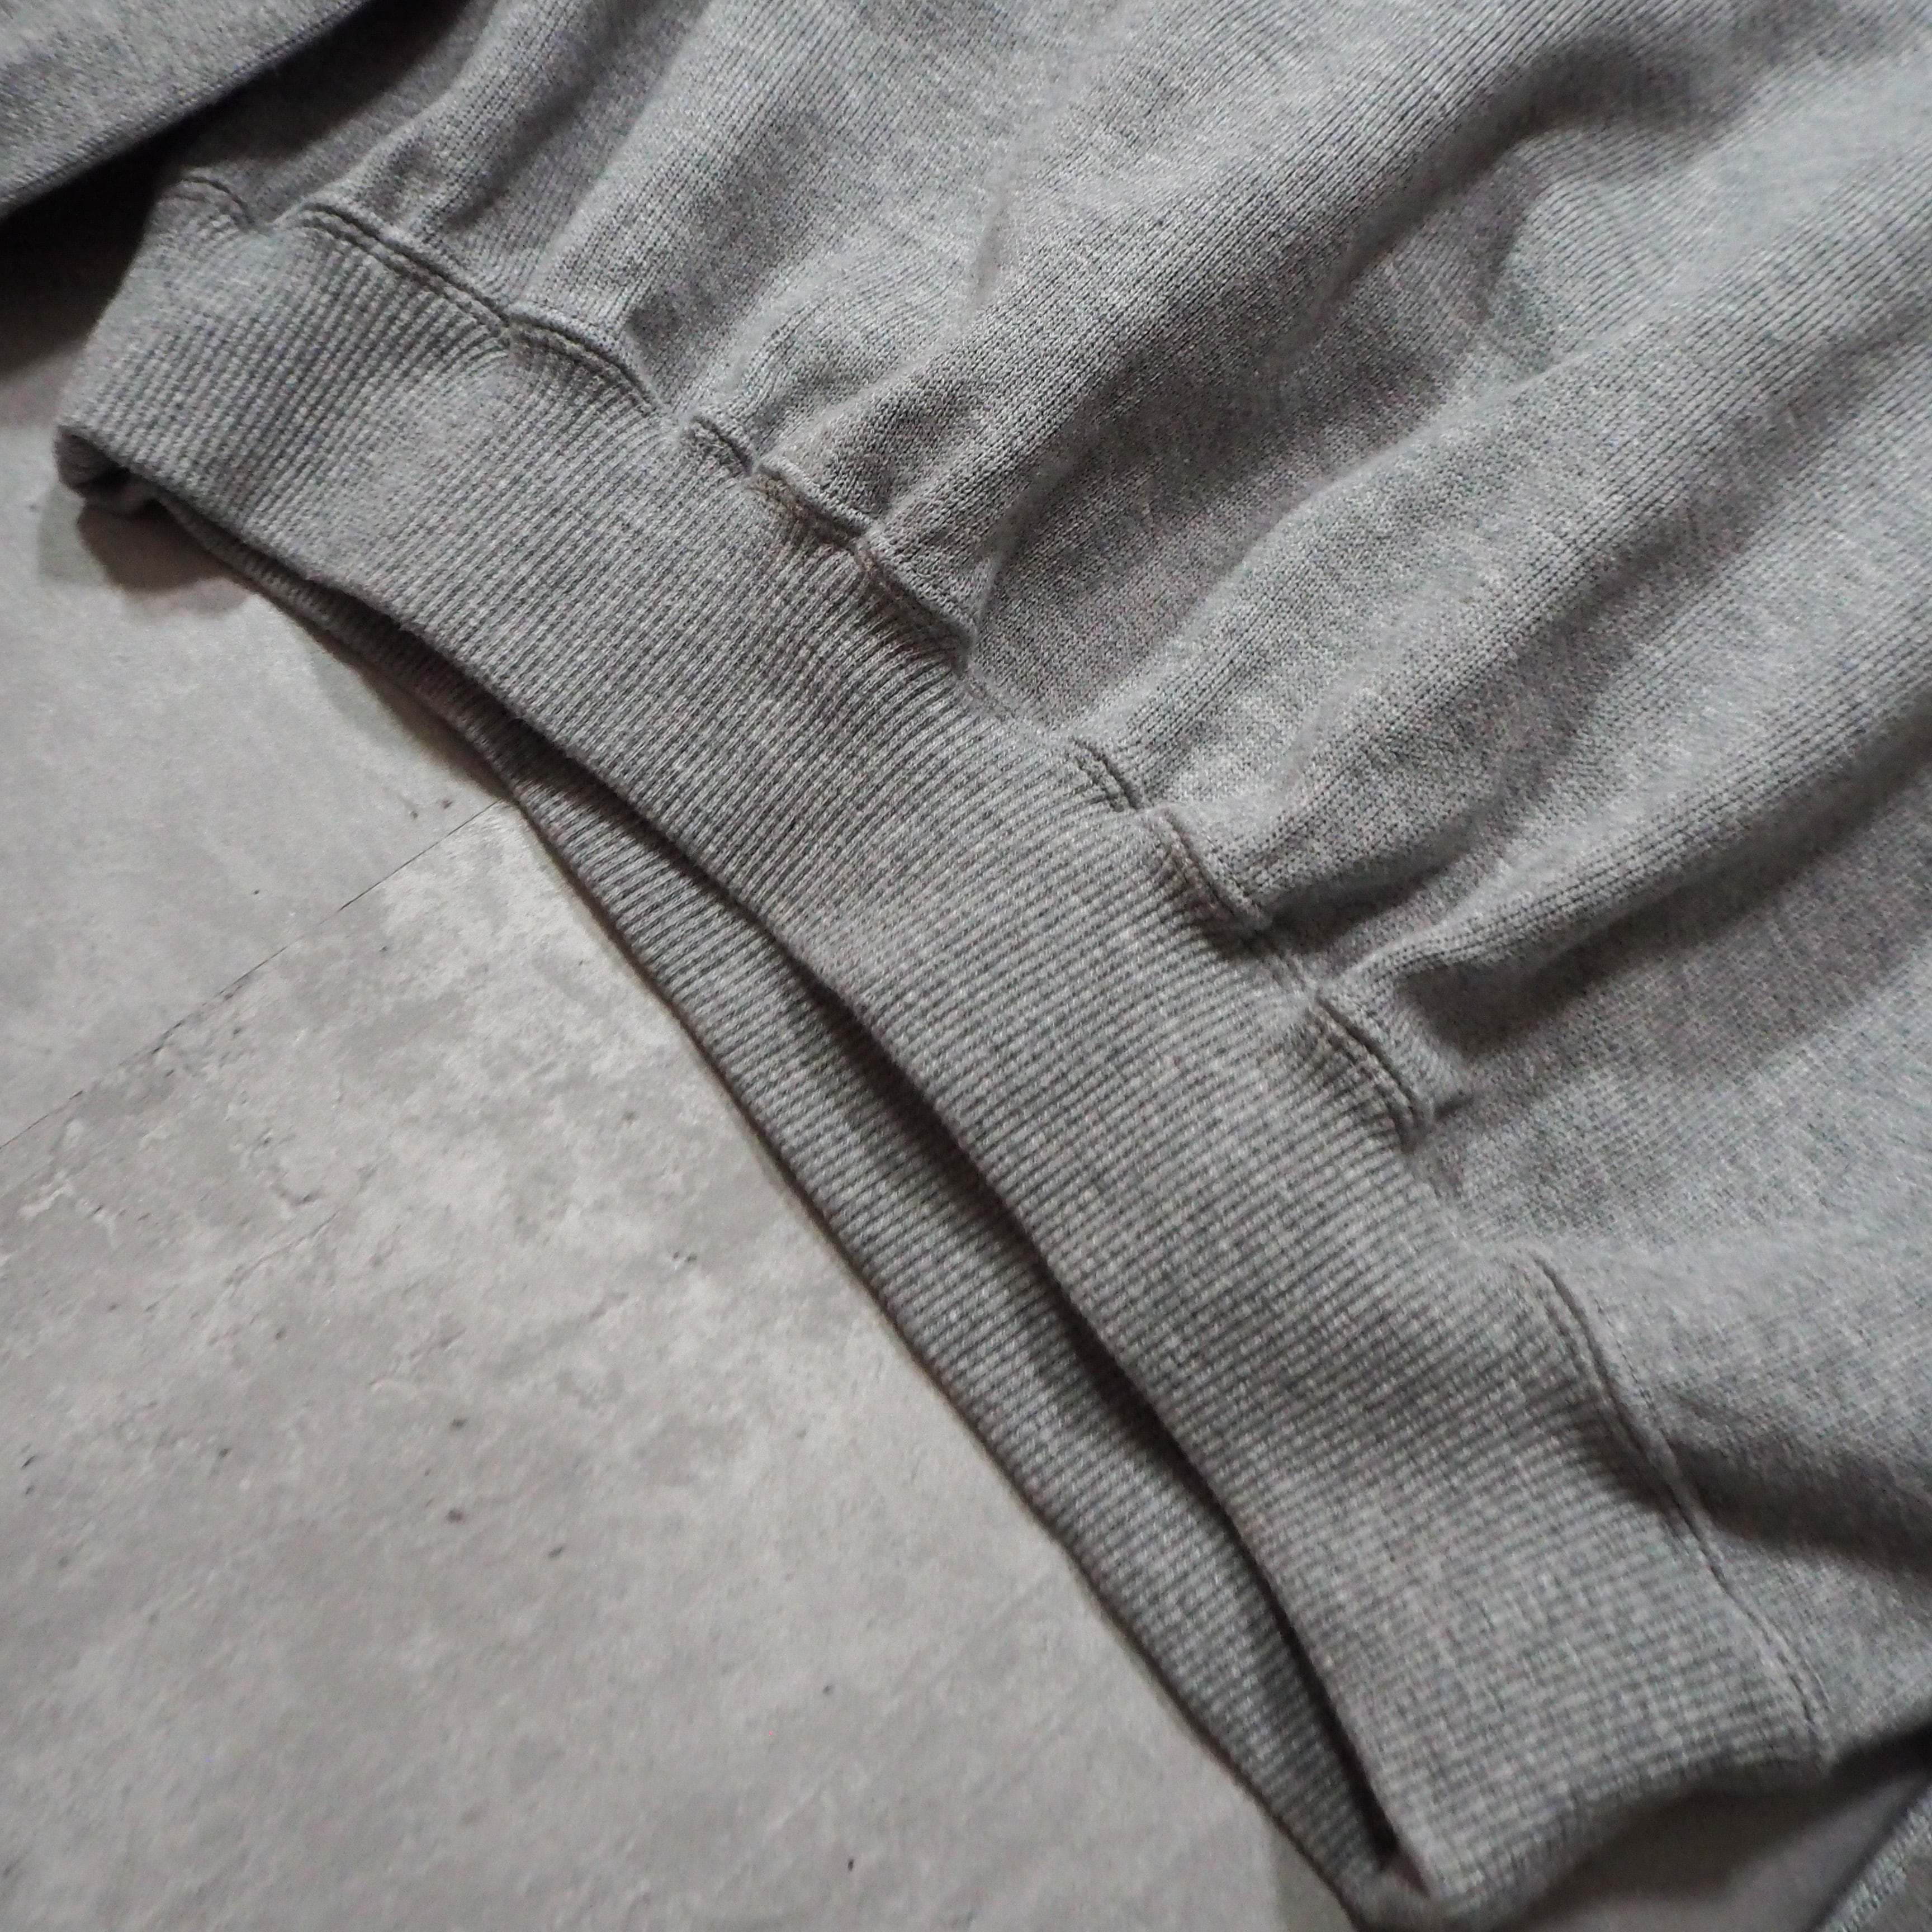 80s-90s “KENZO GOLF” logo gray sweat shirt 80年代 90年代 ケンゾー 